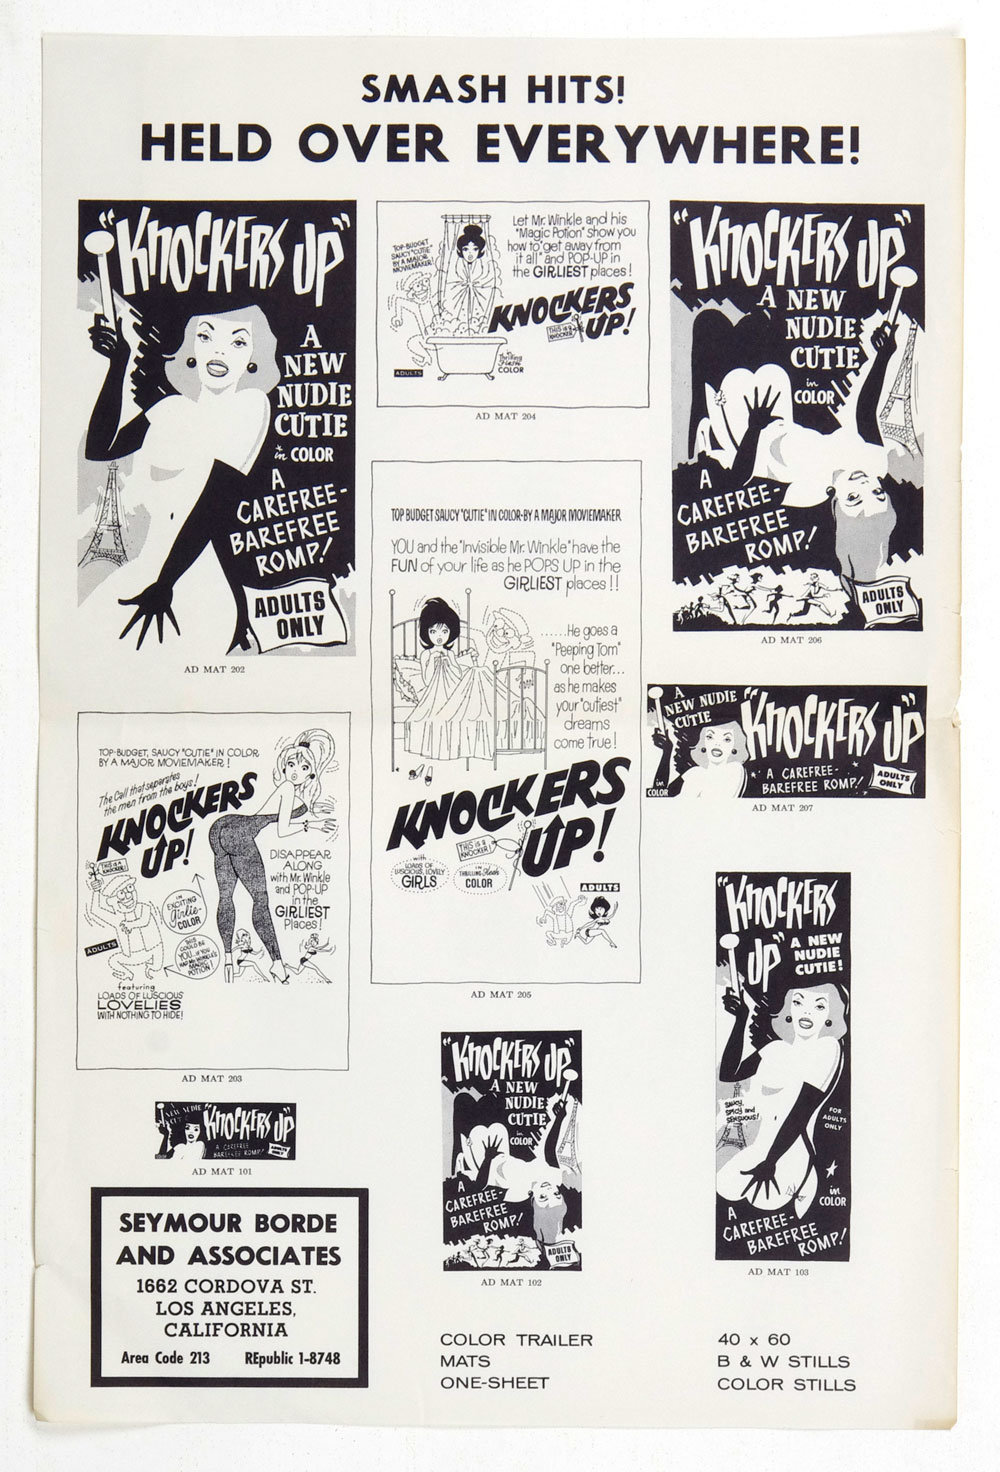 Knockers Up Movie Ad Mat Sheet 1963 